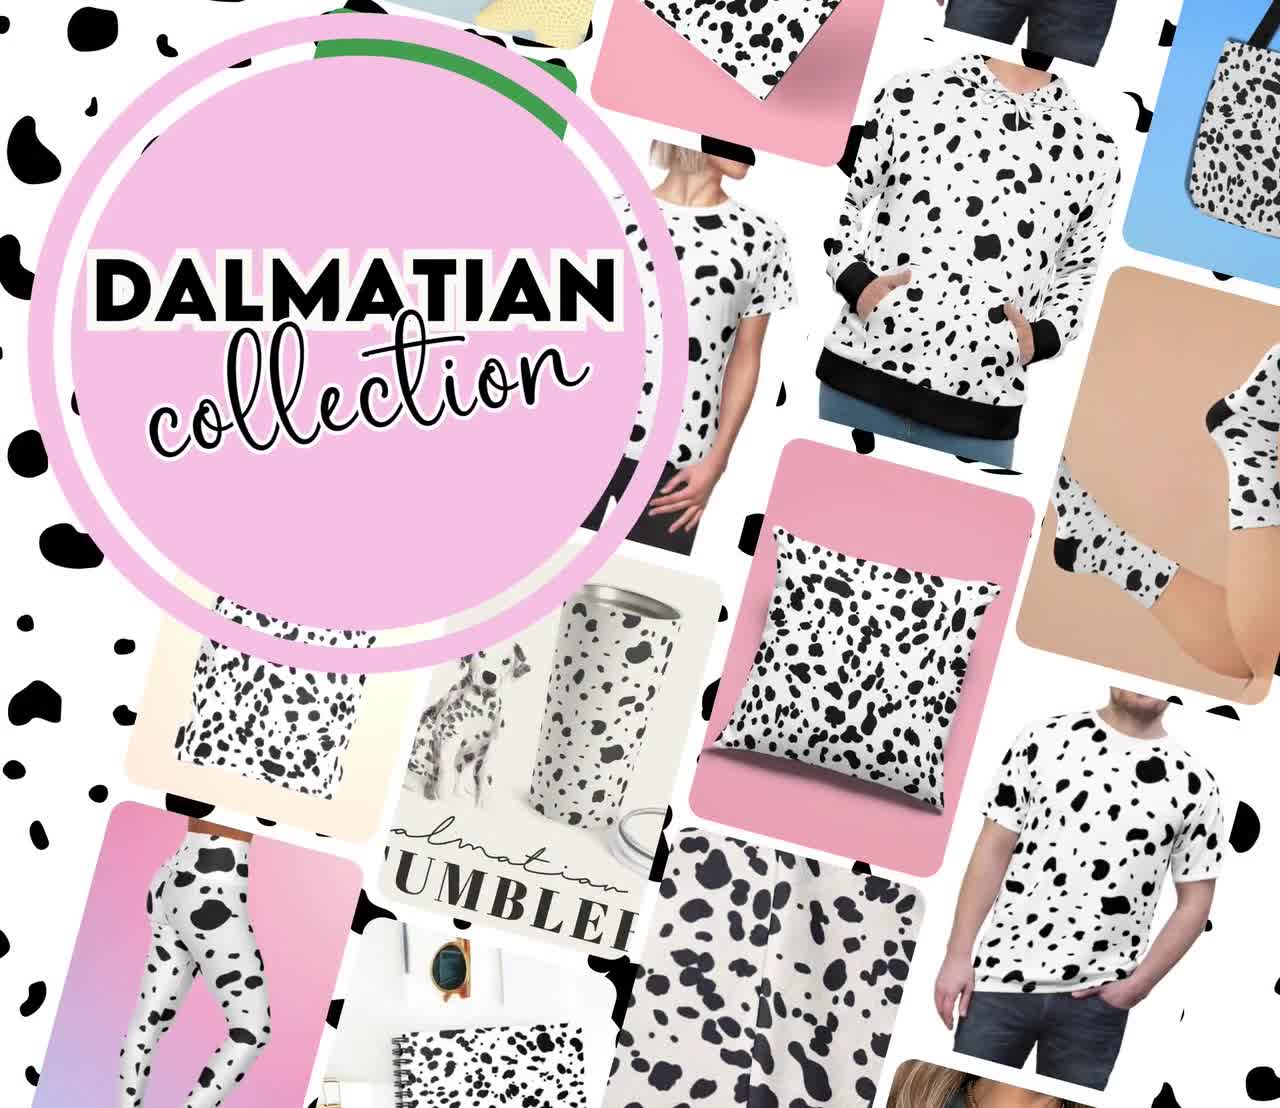 CLEARSTONE Dalmatian shirt Dalmatian shirt cosplay unisex white